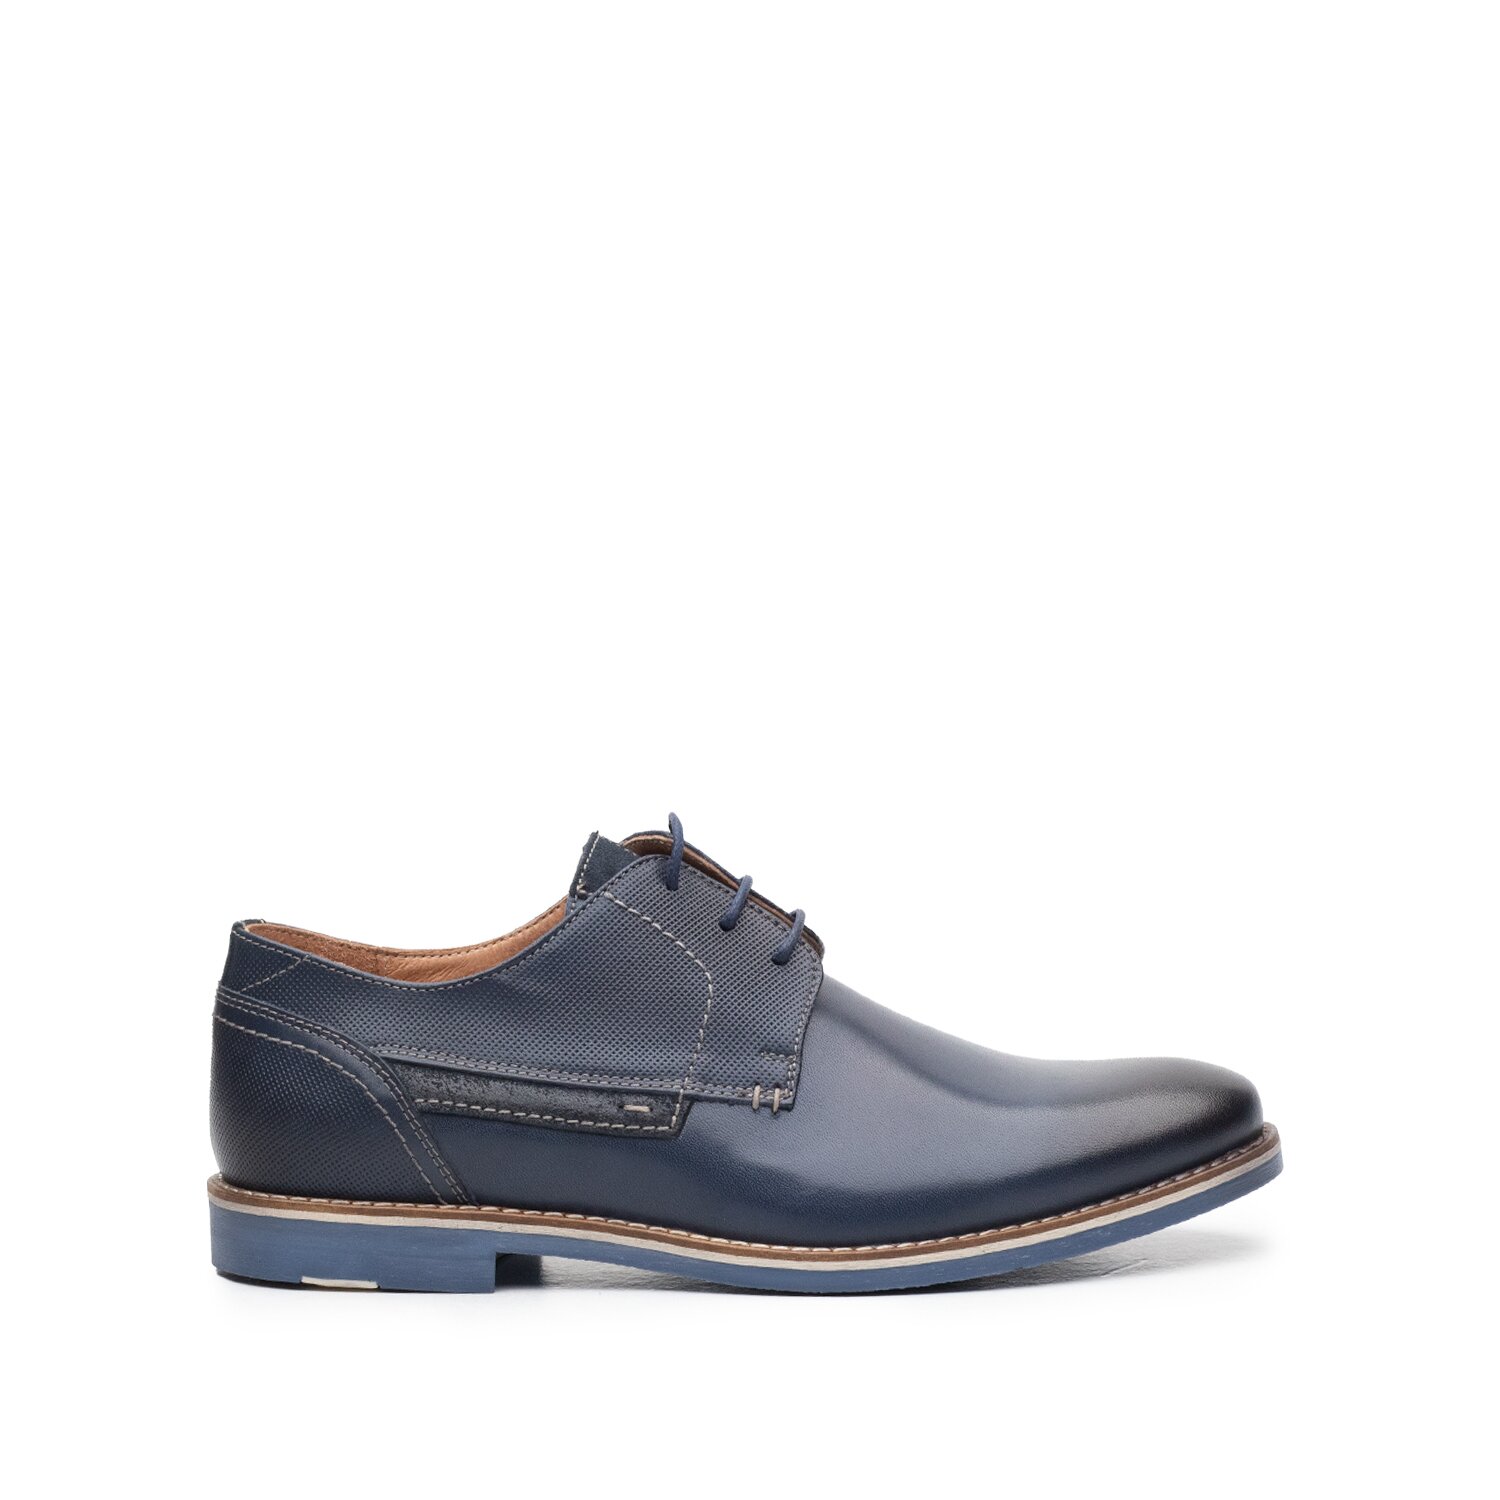 Pantofi casual barbati din piele naturala, Leofex - 845 blue box